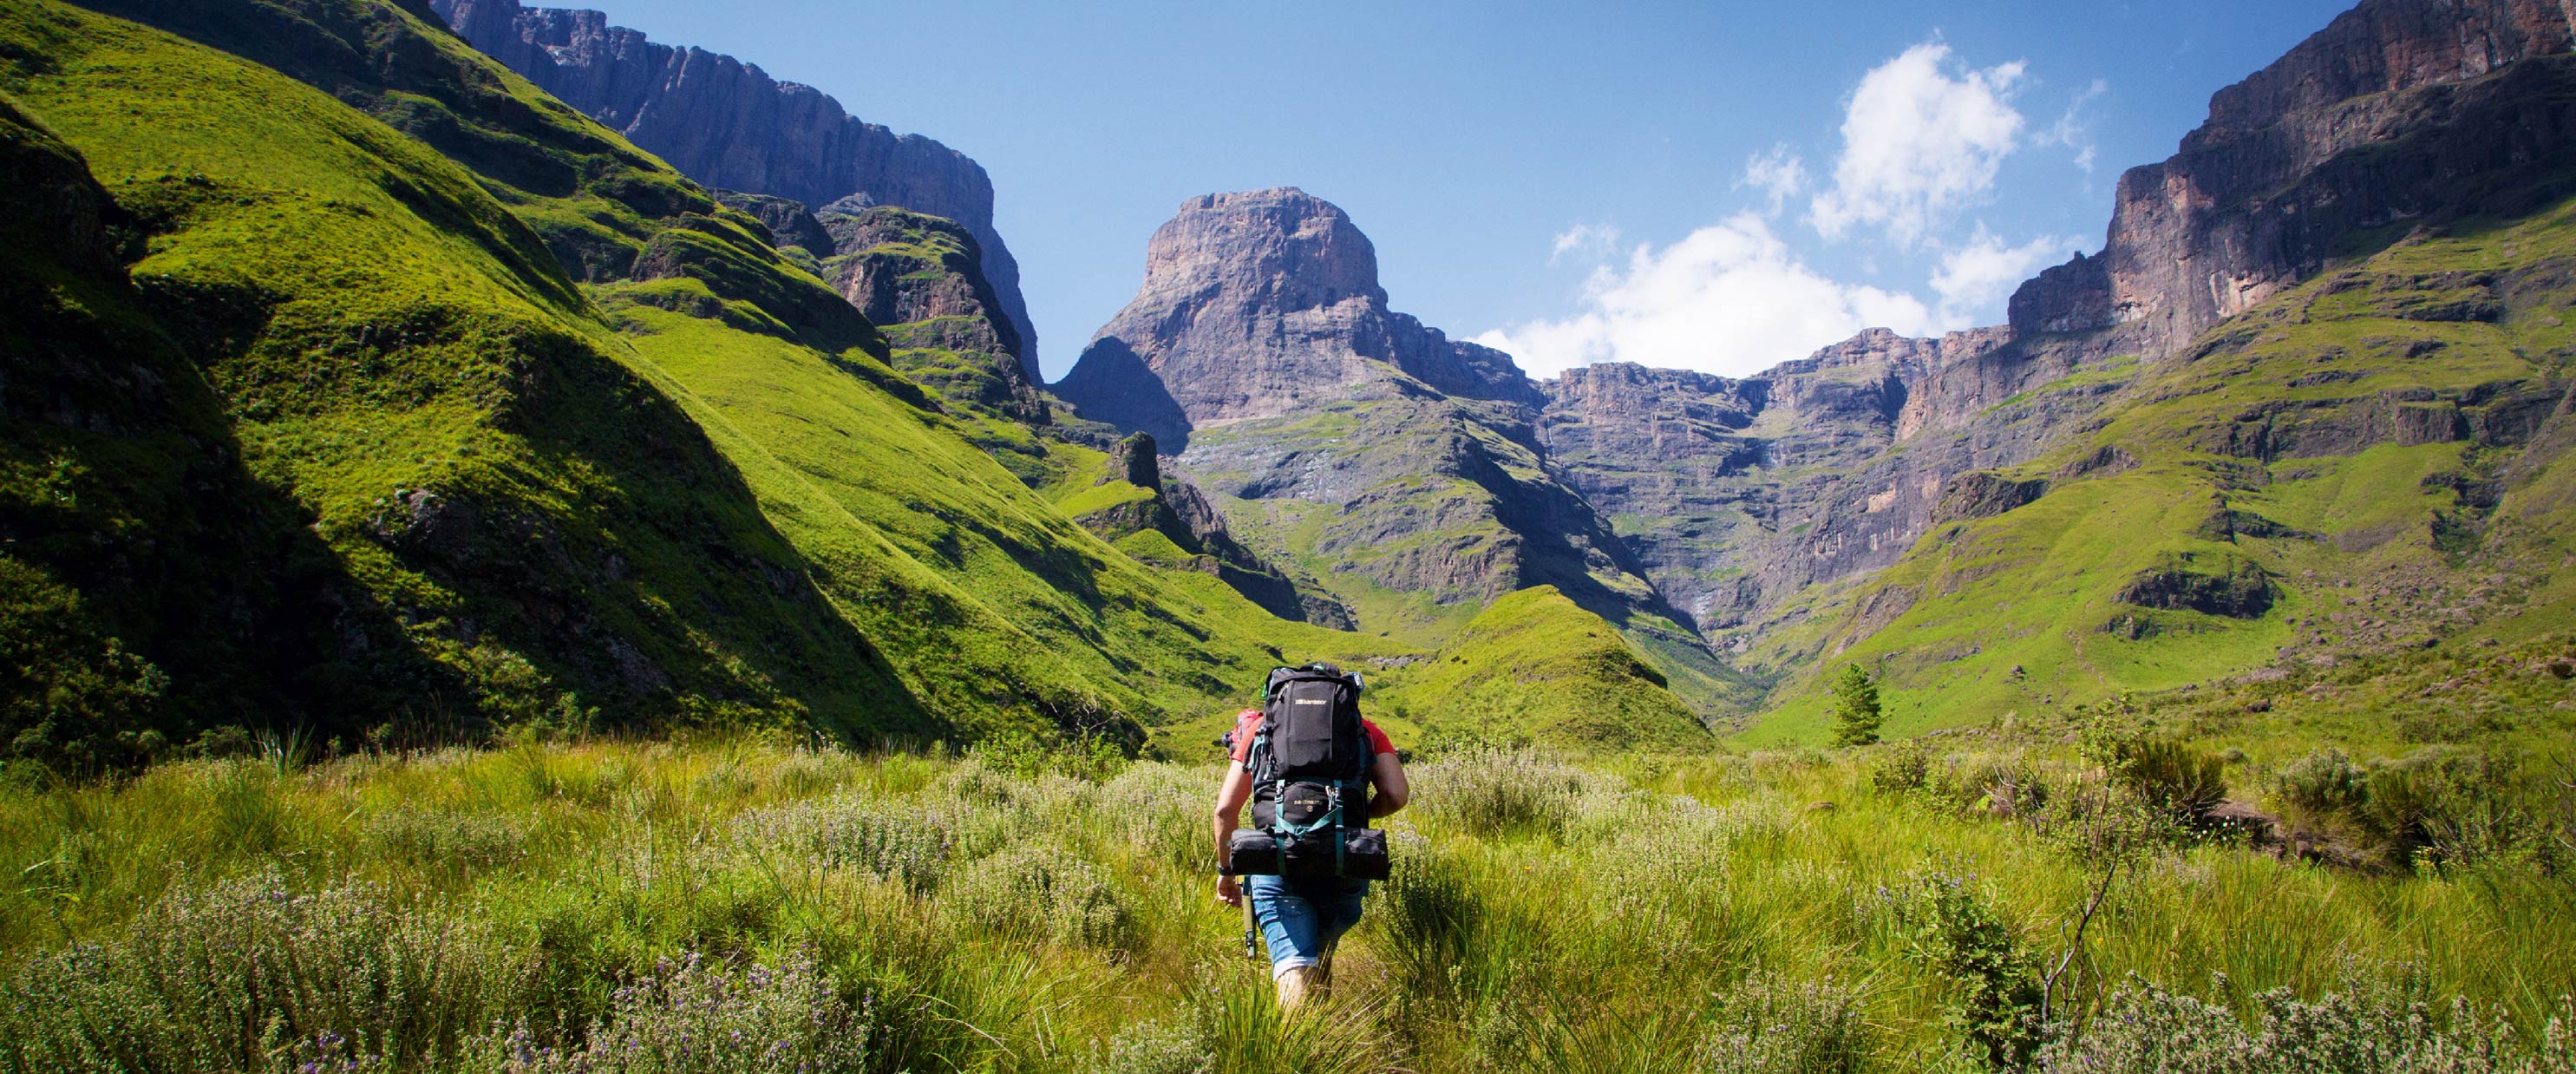 Kamberg - Drakensberg Hikes - explore the Drakensberg